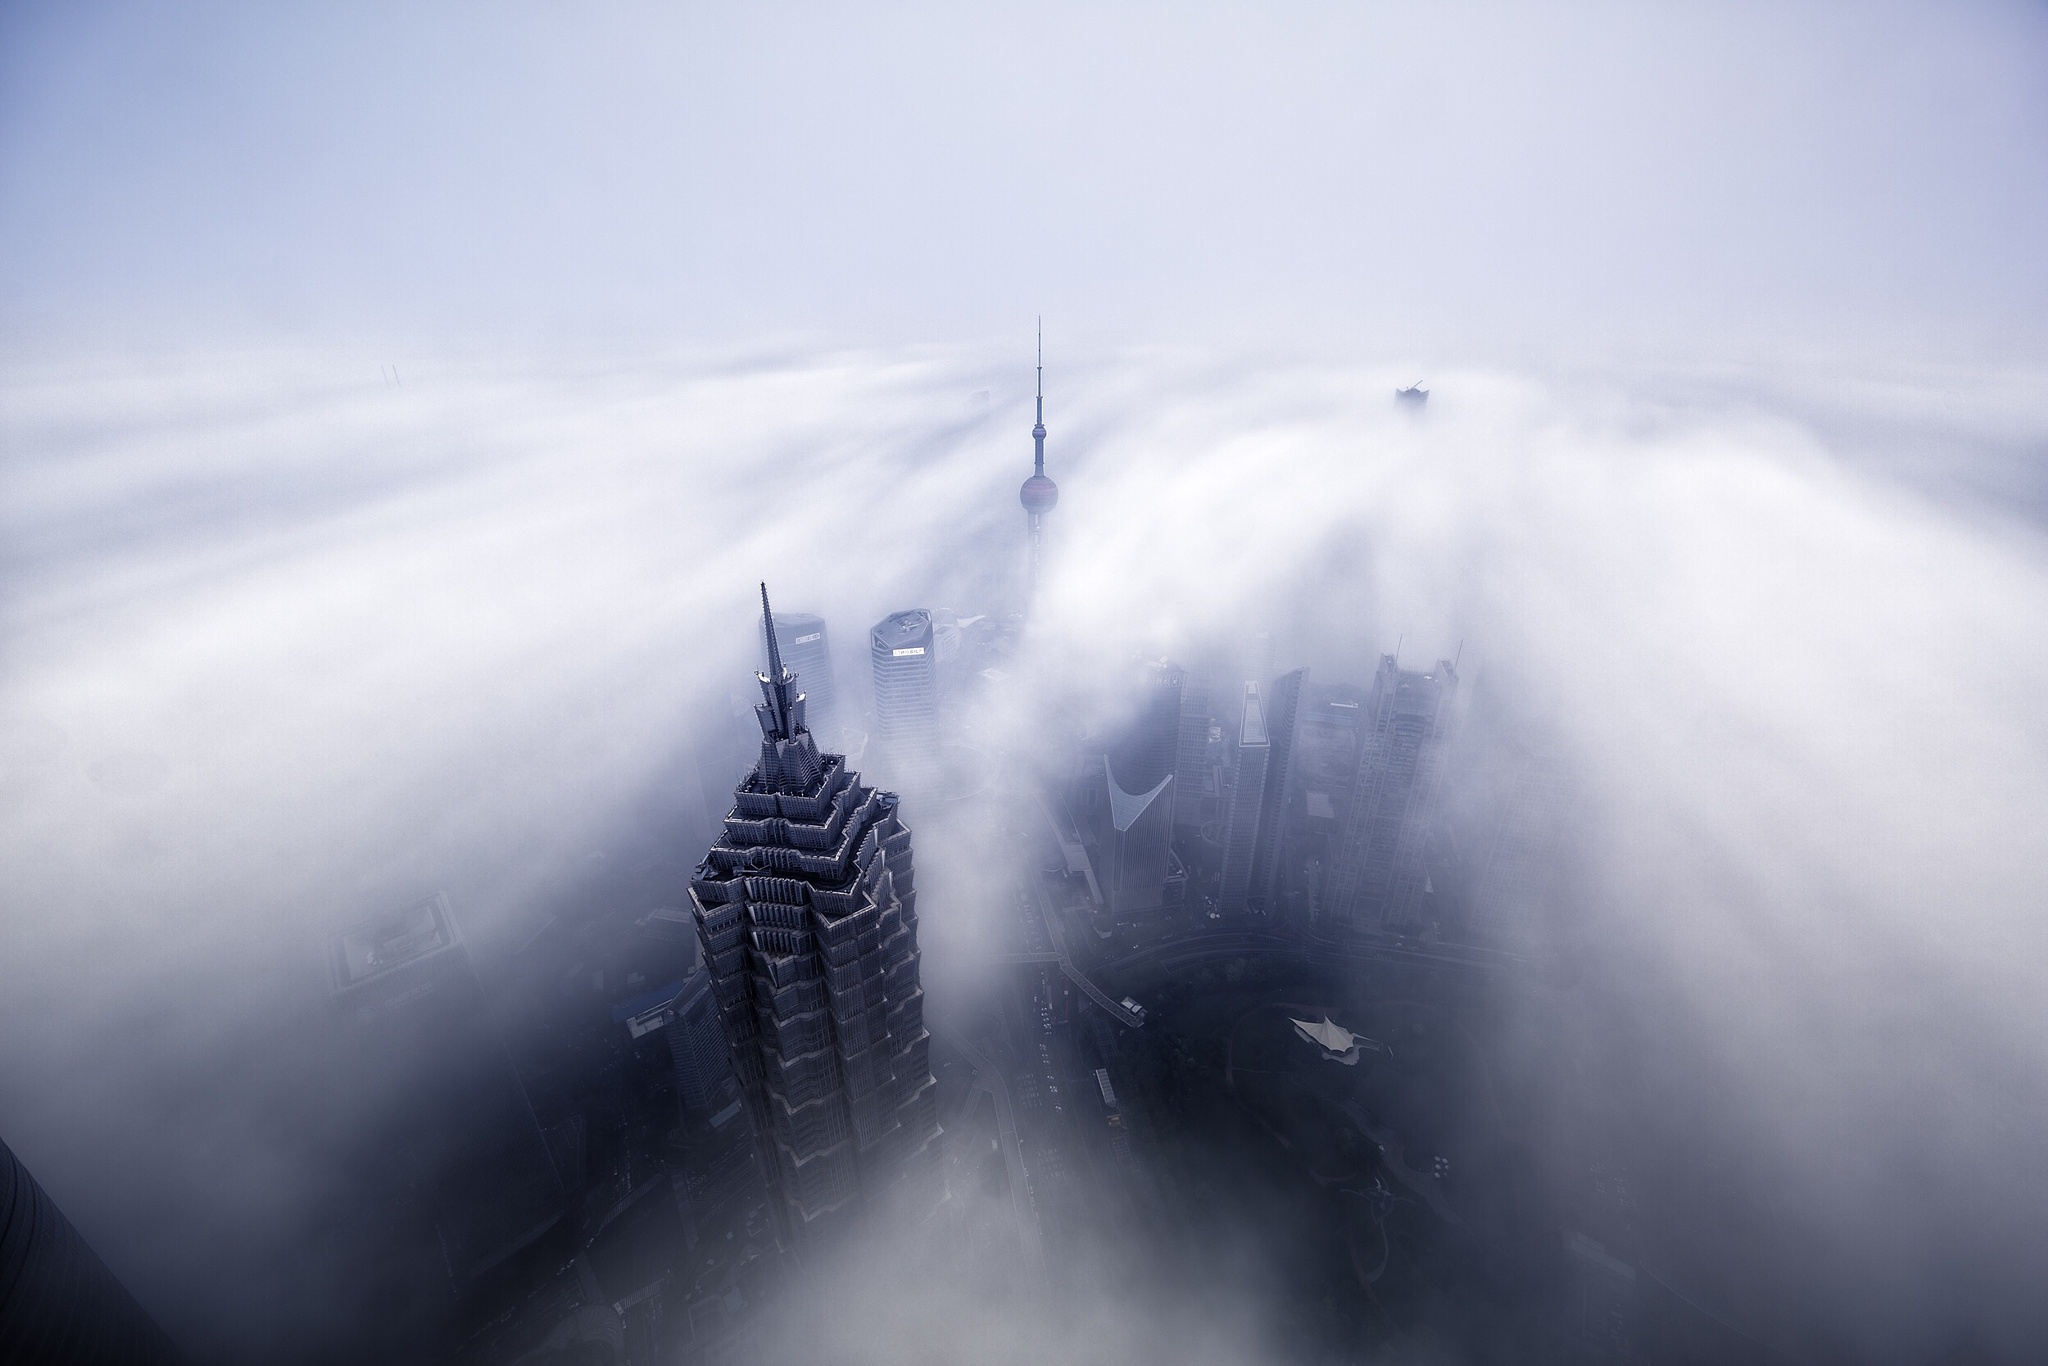 Aerial Building China Fog Shanghai Skyscraper 2048x1366